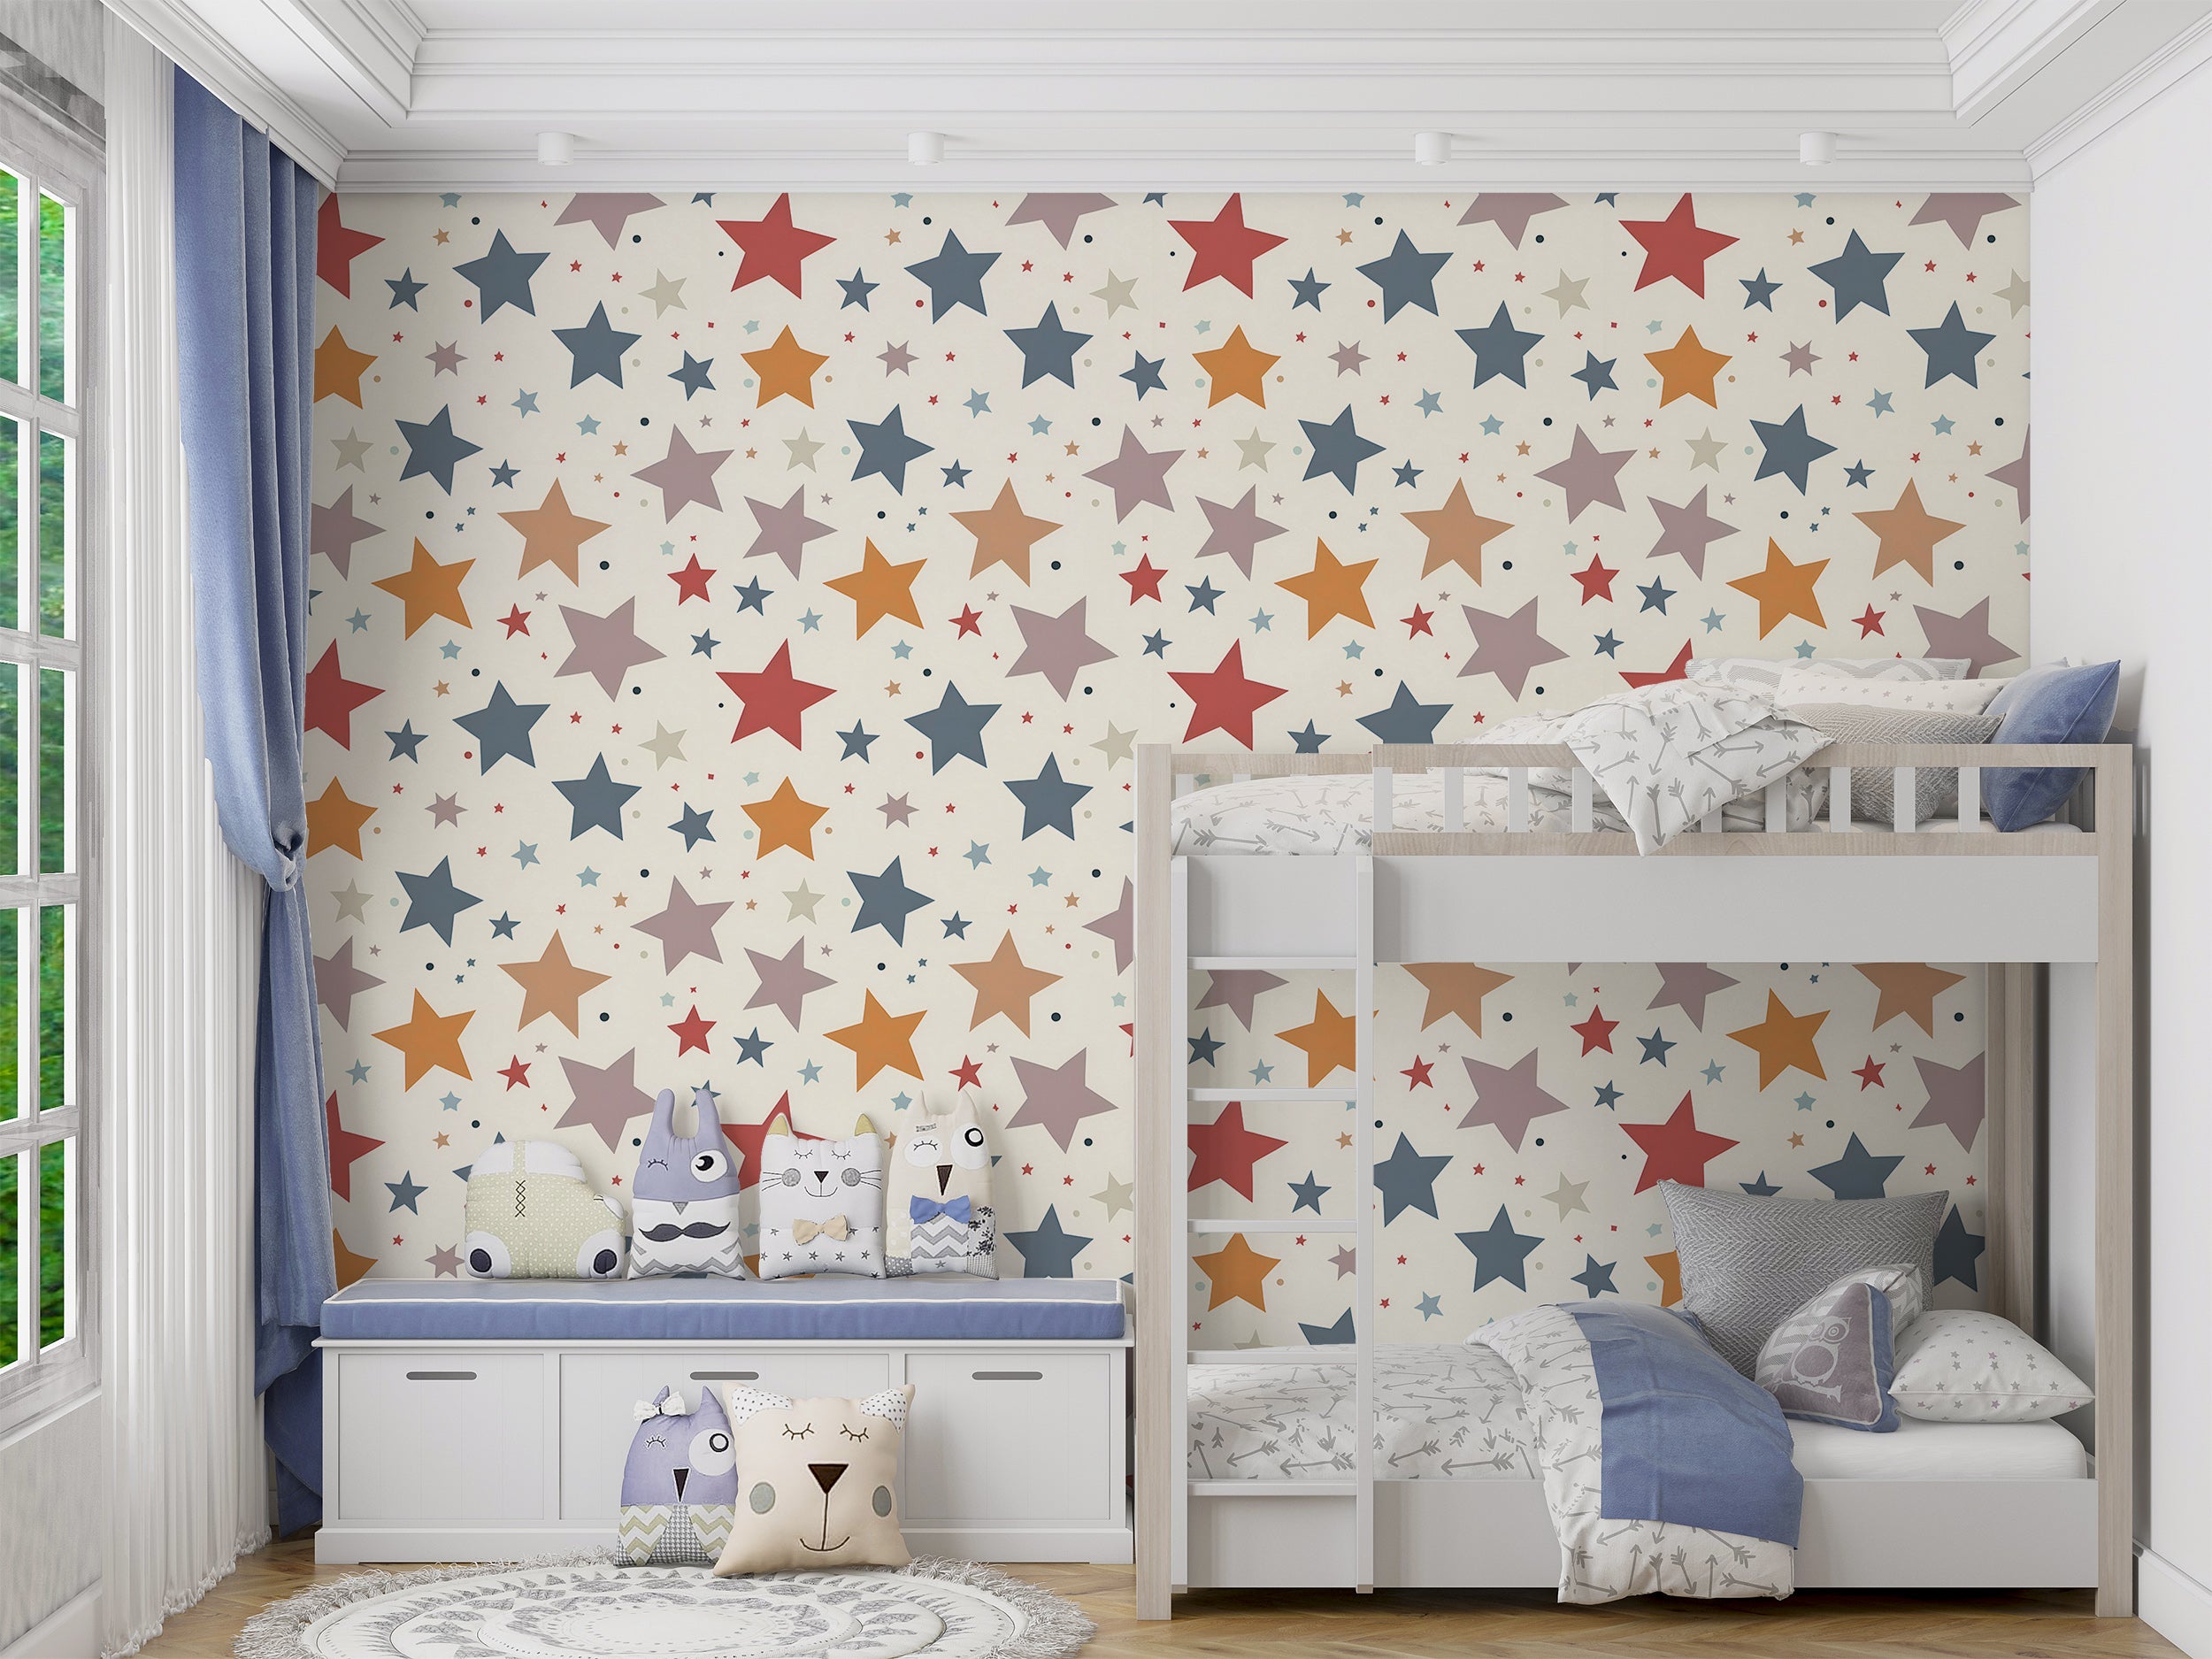 Minimalistic Starry Wallpaper, Stars Wallpaper, Peel and Stick Kids Accent Wall Decor, Removable Star Design Wallpaper, PVC-free